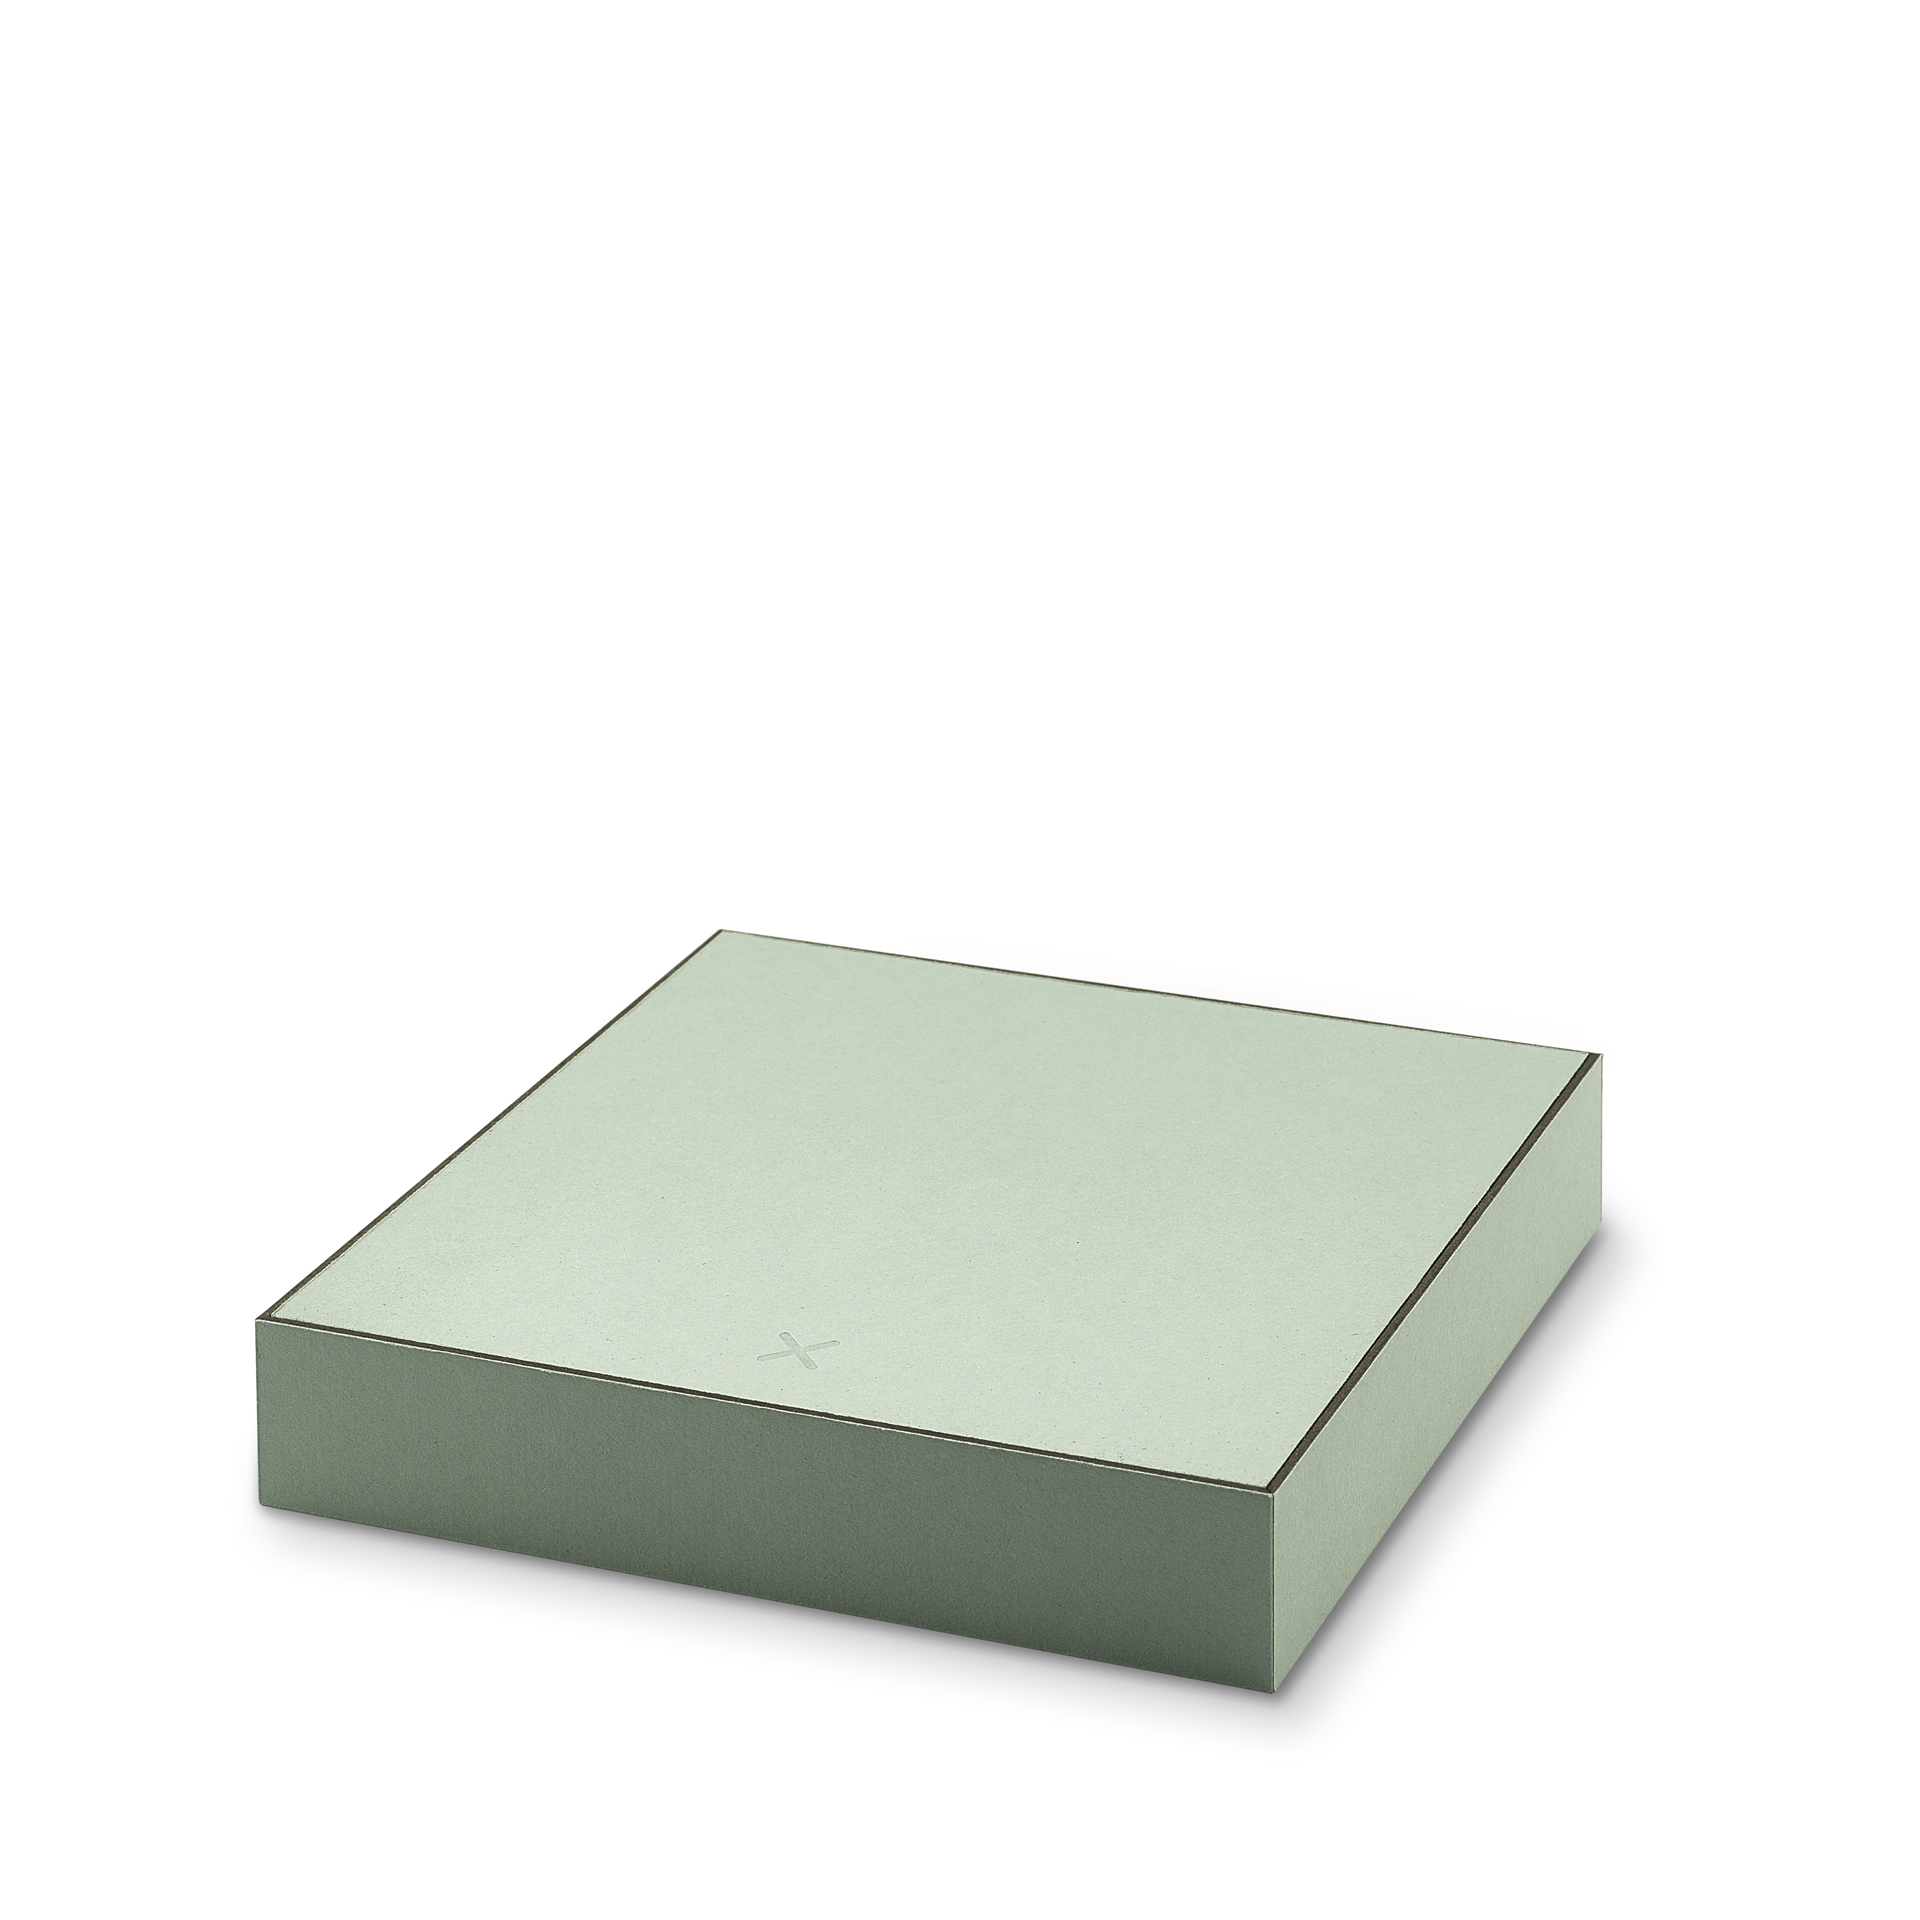 Flipbox Kette 167 x 167 x 30 mm, graugrün